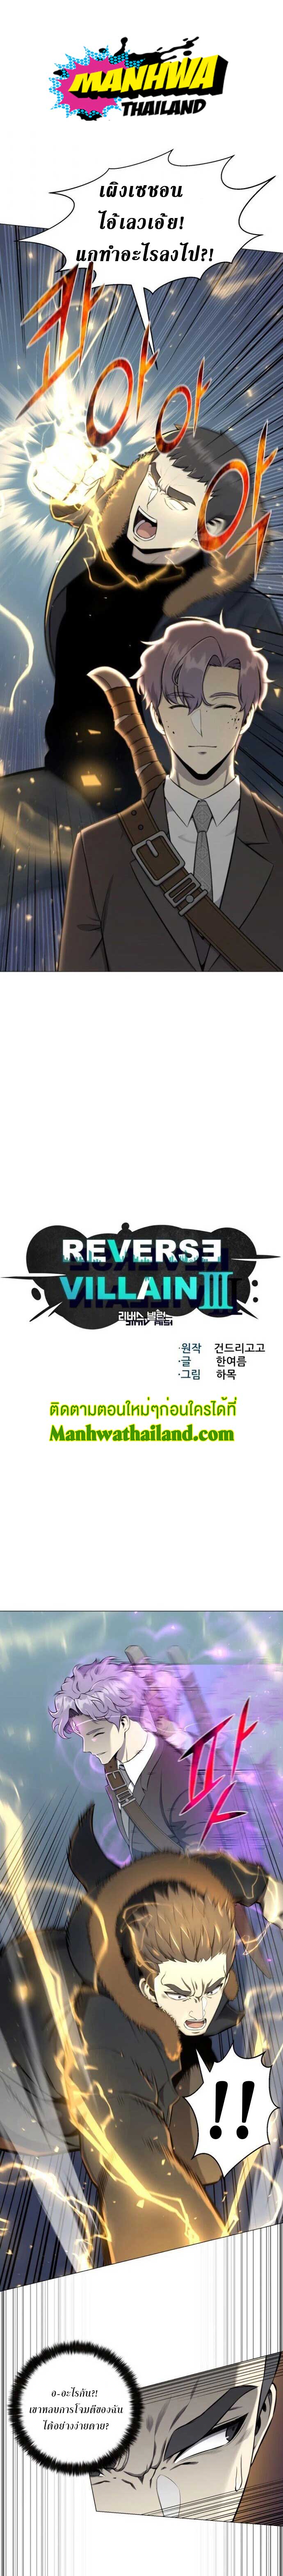 Reverse Villain85 (1)